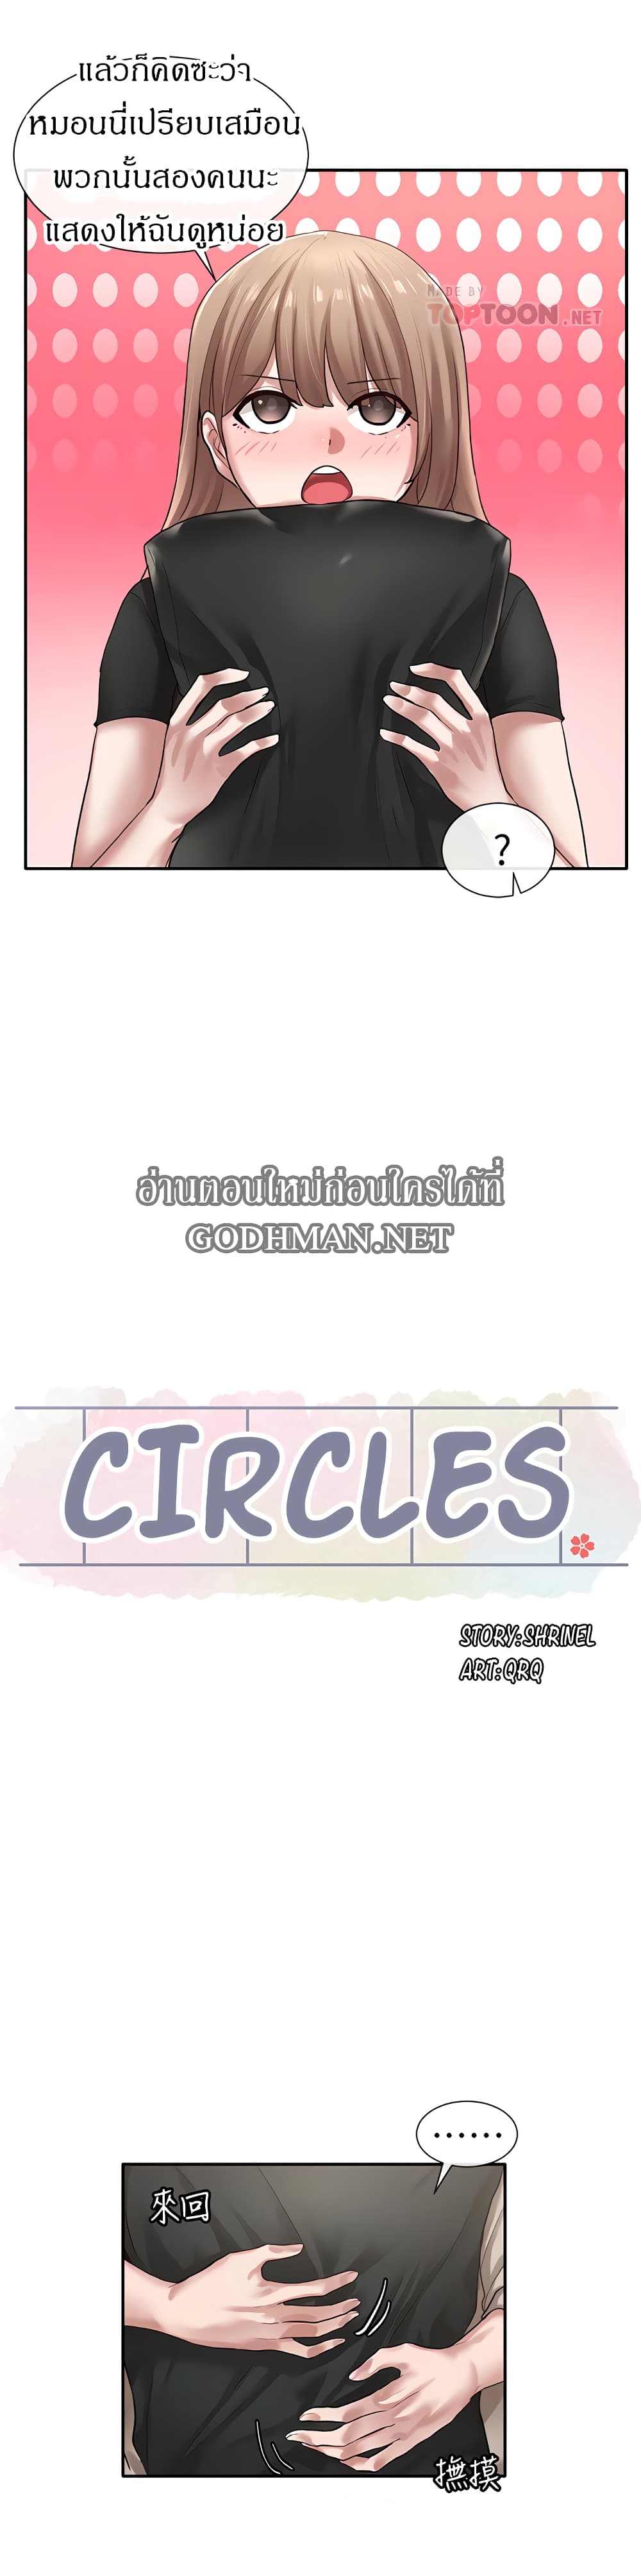 Theater Society (Circles) 33 (20)